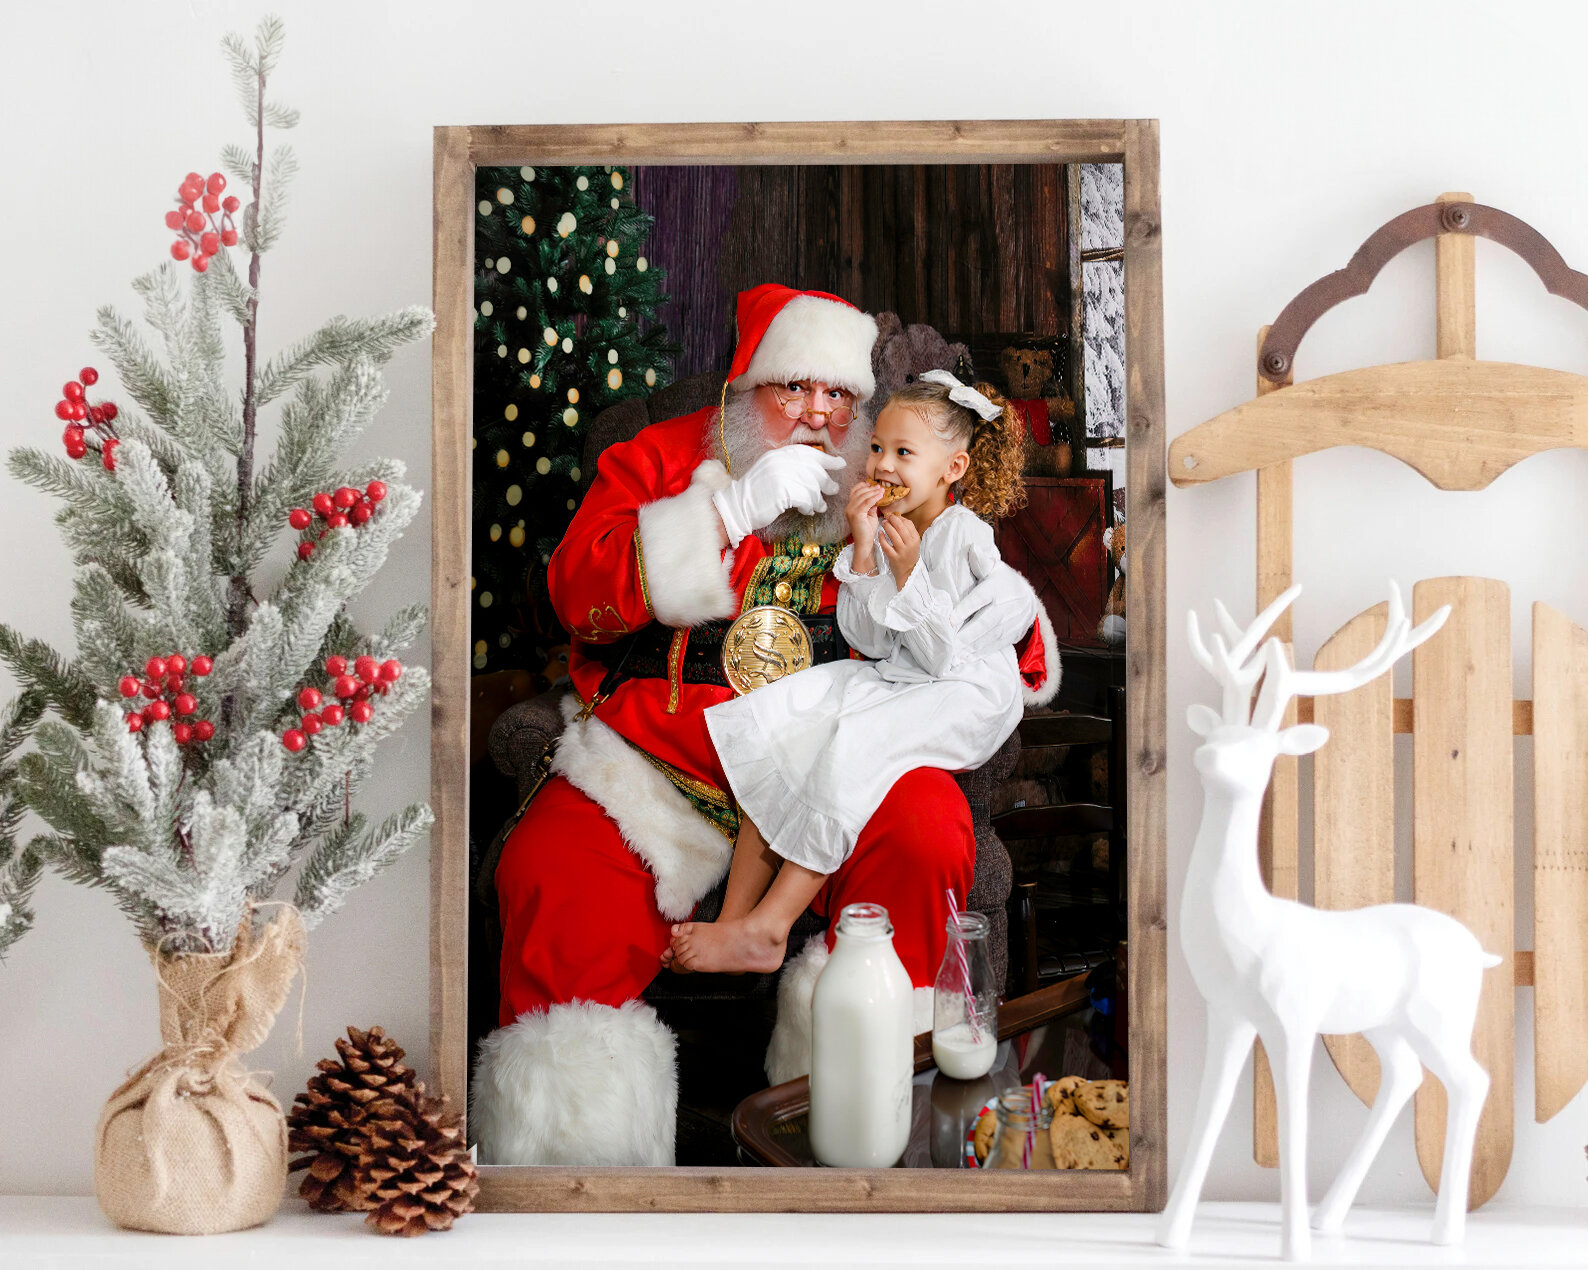 Lani-artwork-ashlie-steinau-photography-christmas-santa-experience-cookie-holiday